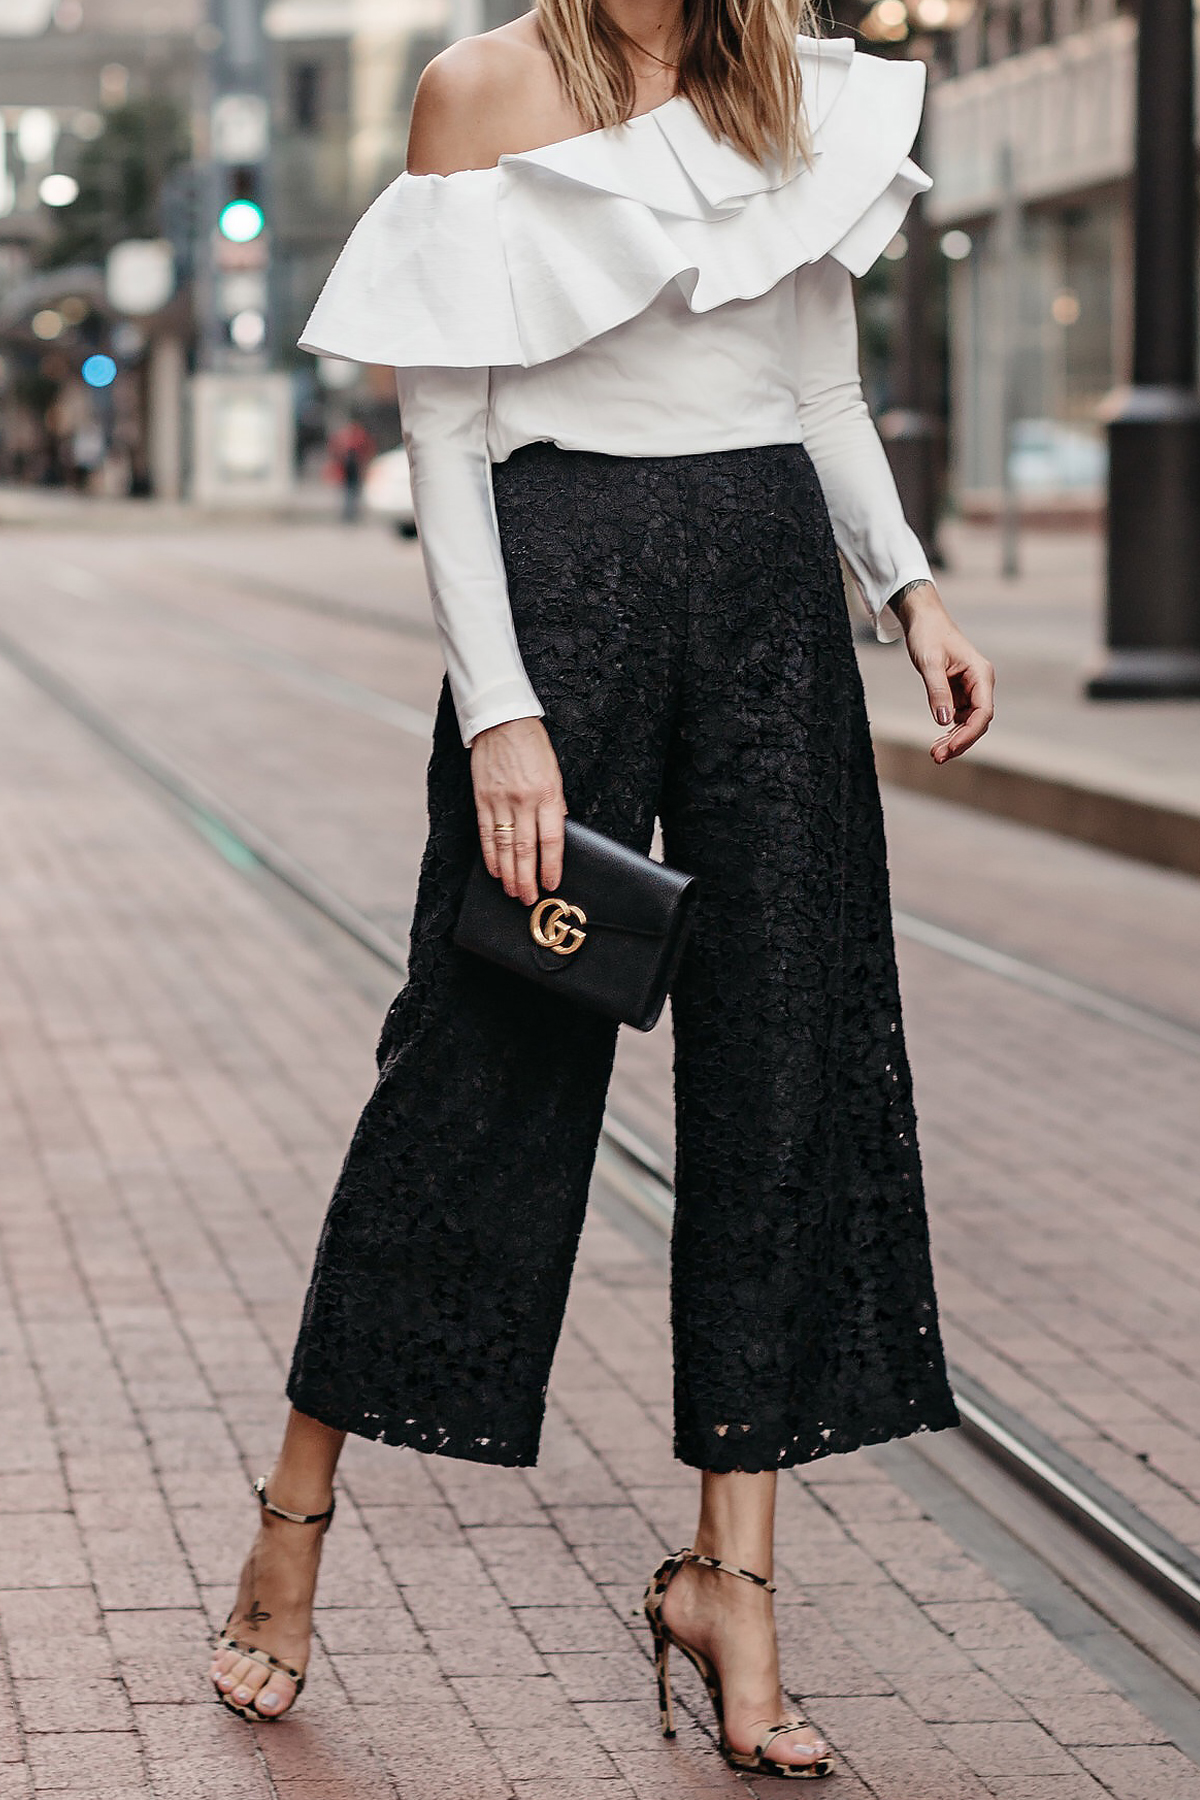 White One Shoulder Ruffle Top Black Lace Culottes Gucci Marmont Handbag Leopard Heels Fashion Jackson Dallas Blogger Fashion Blogger Street Style